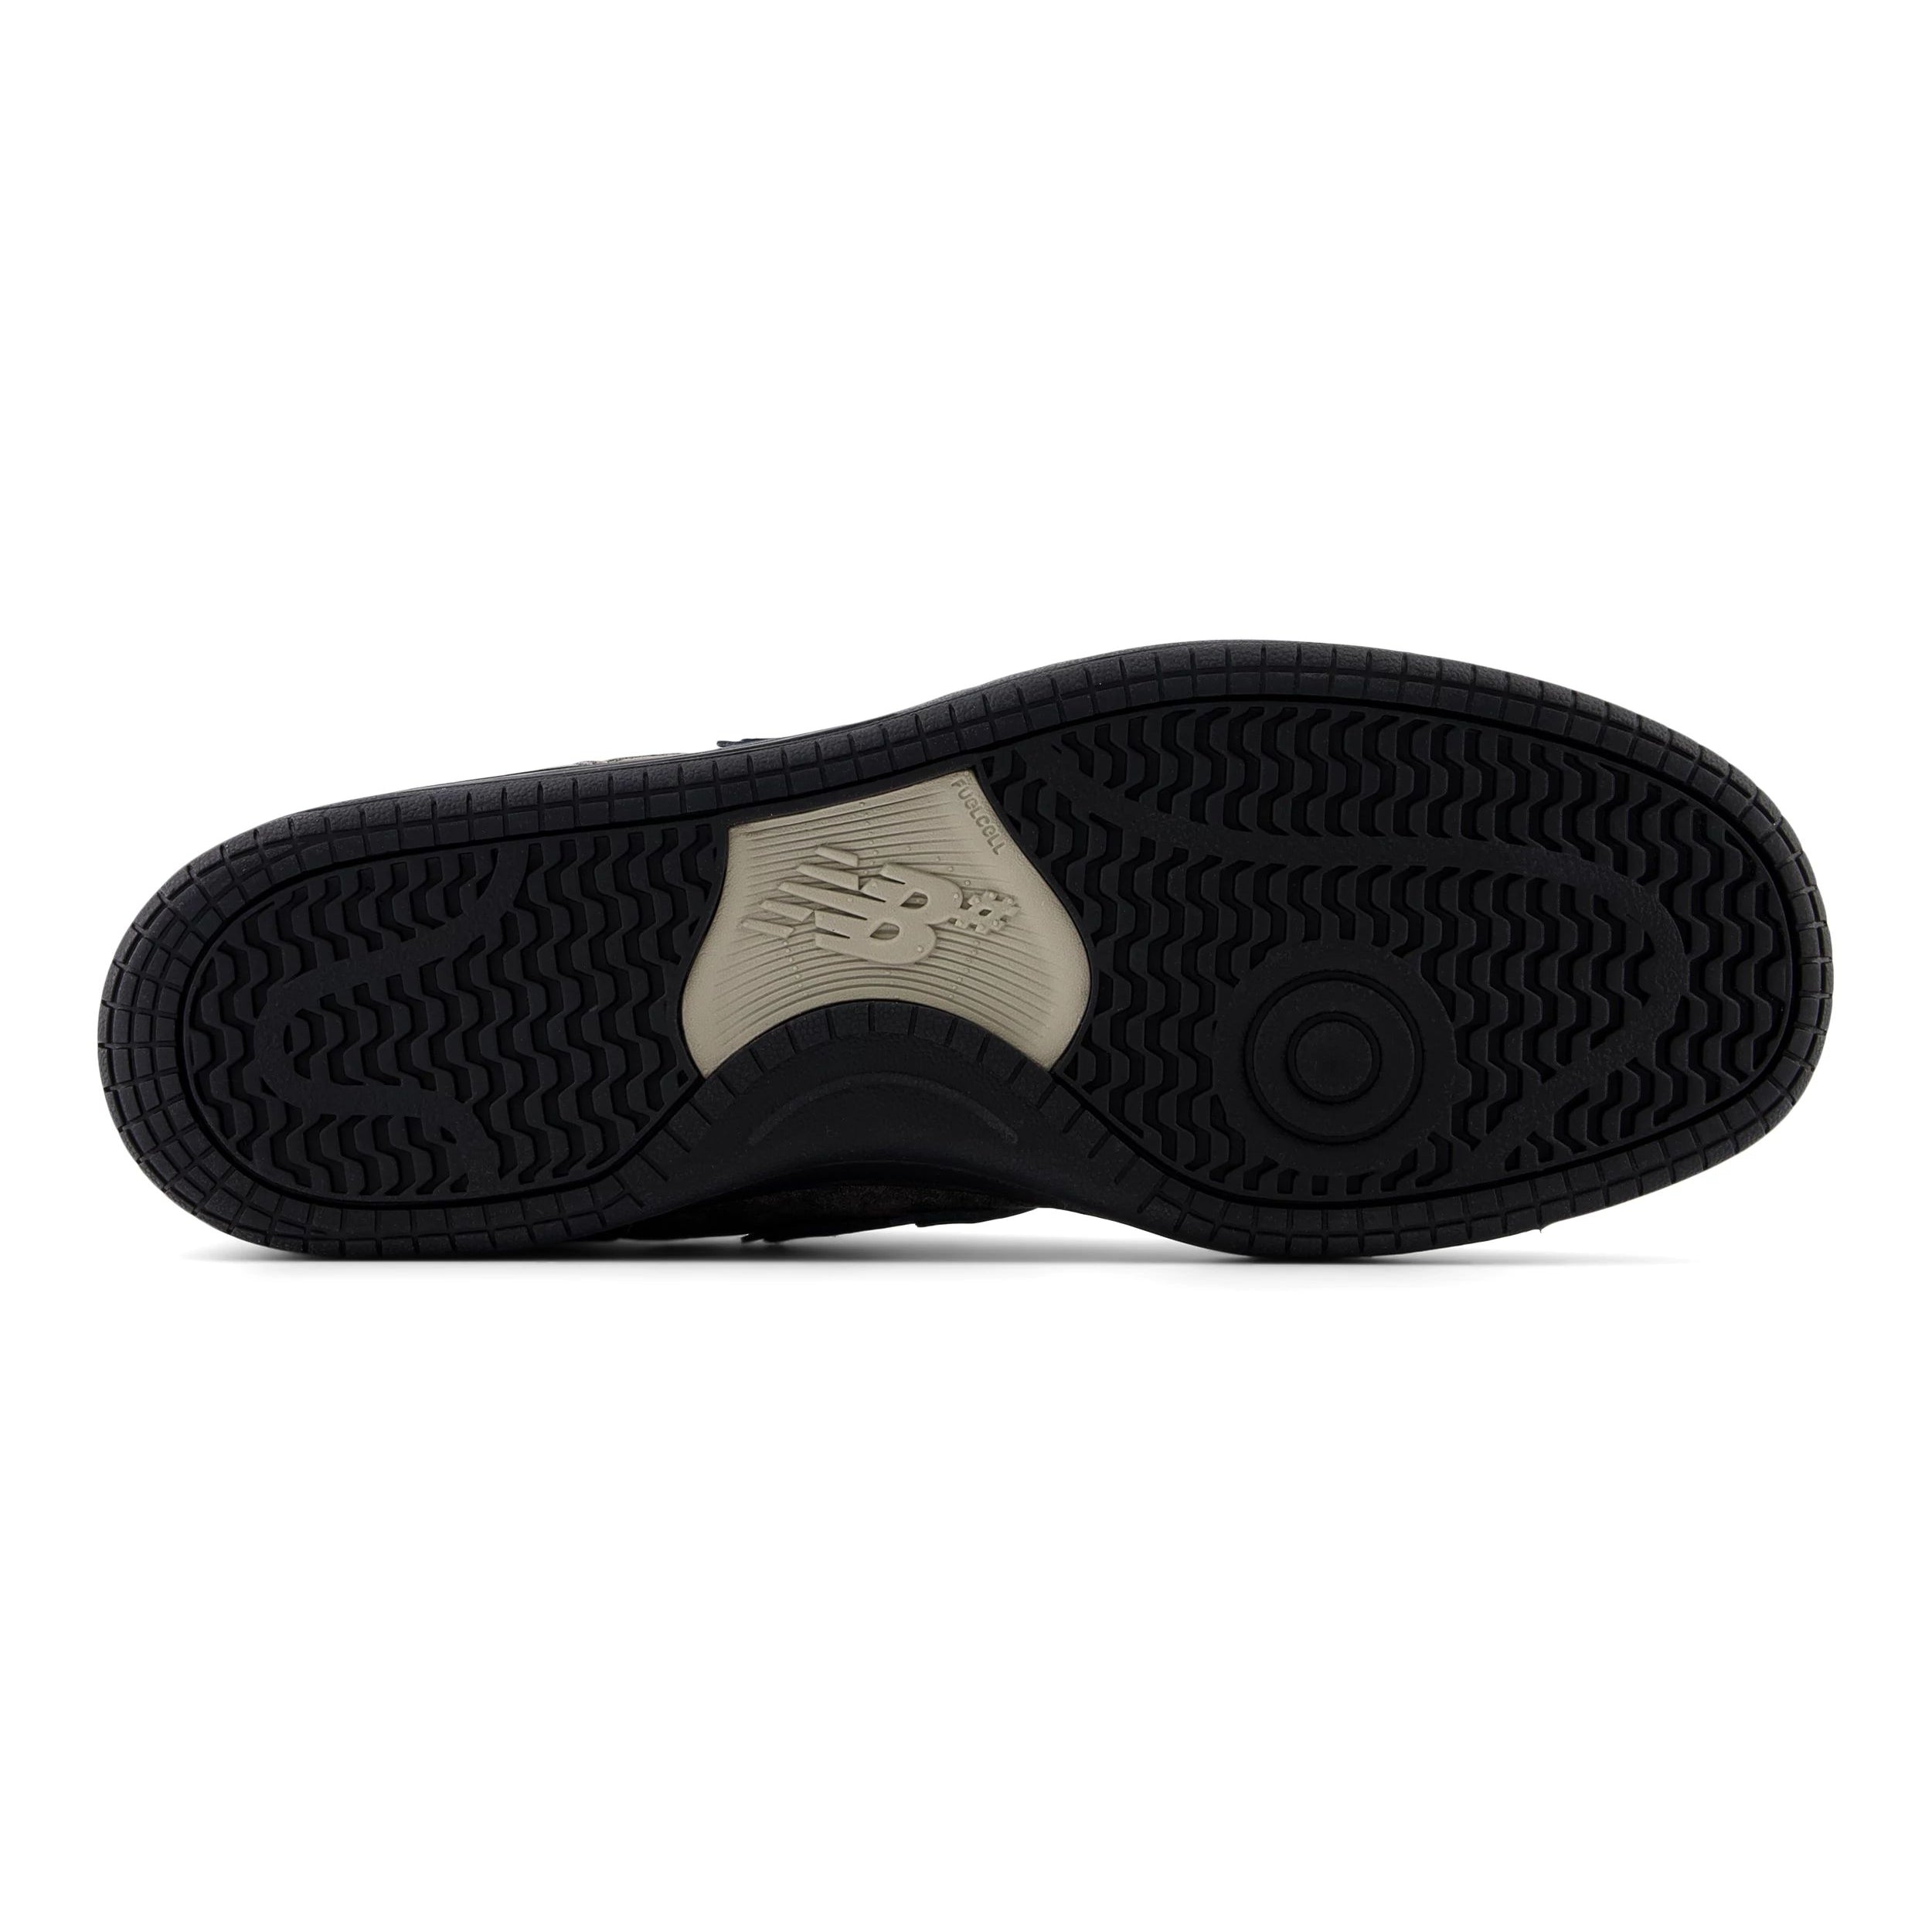 Blue/Grey NB Numeric 480 Skate Shoe Bottom